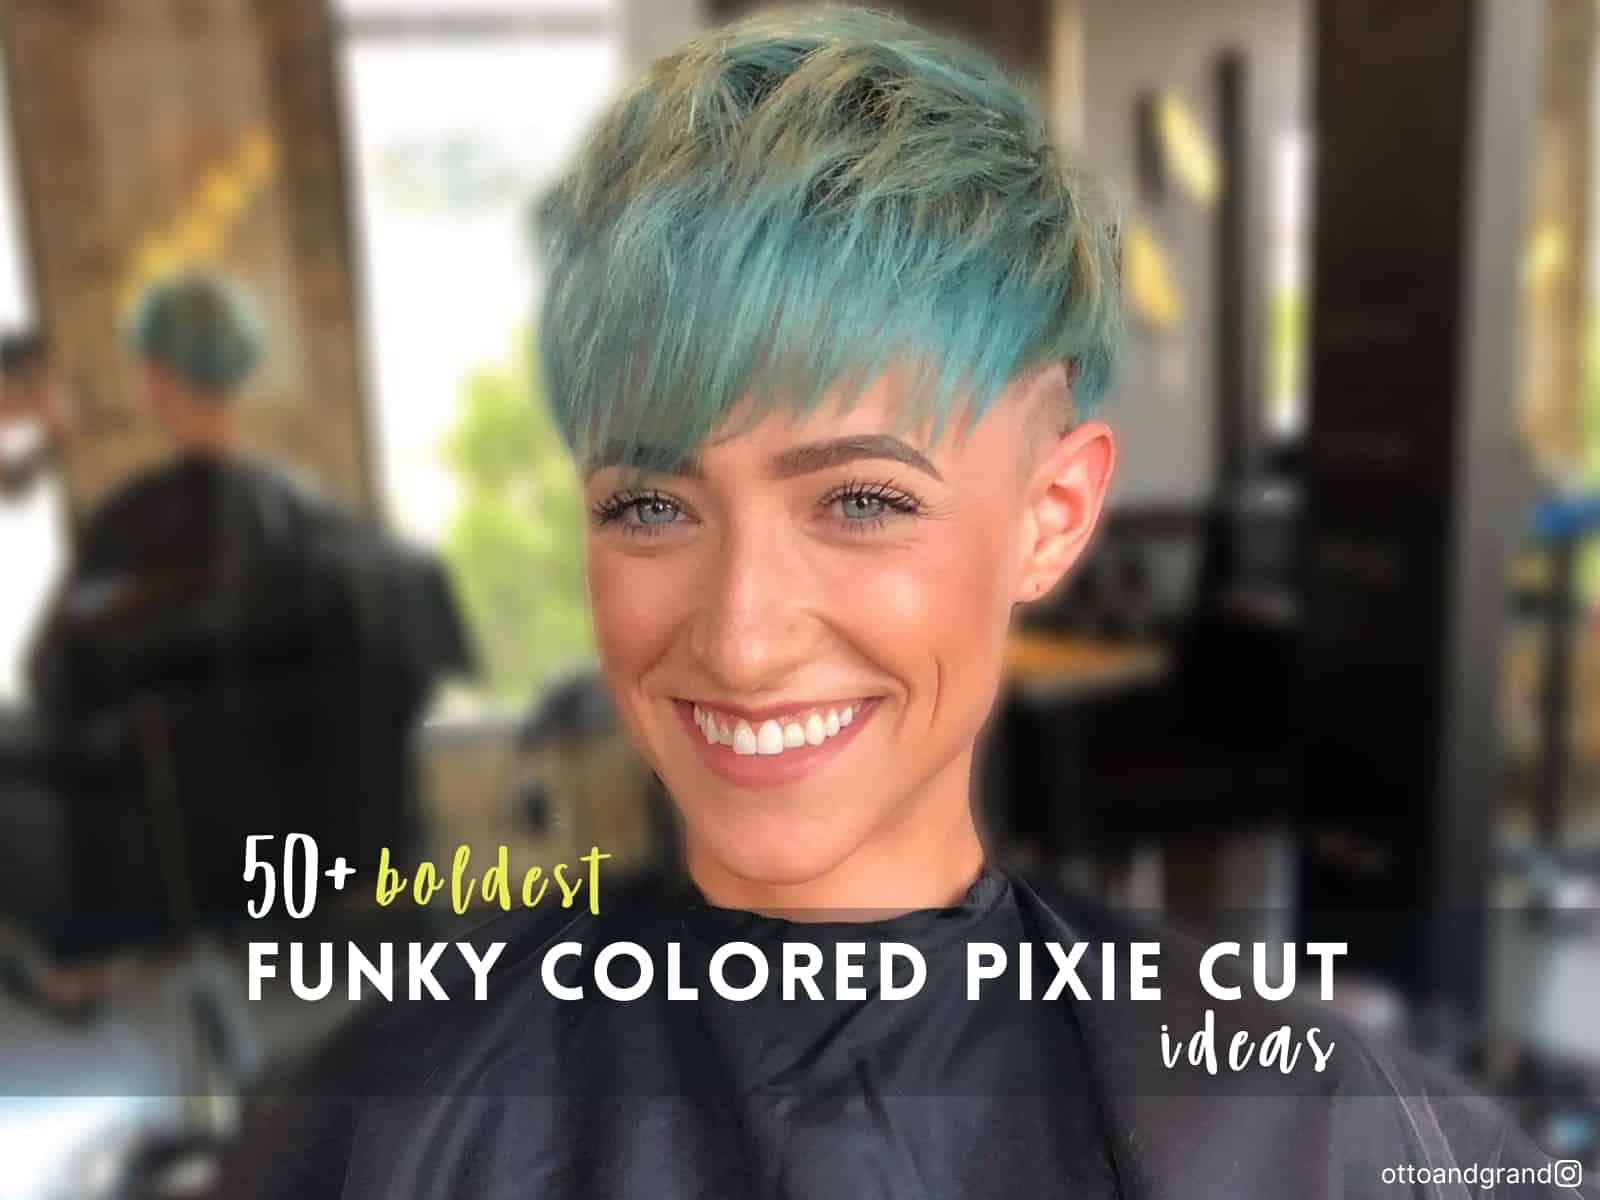 50+ Boldest Funky Colored Pixie Cut Ideas